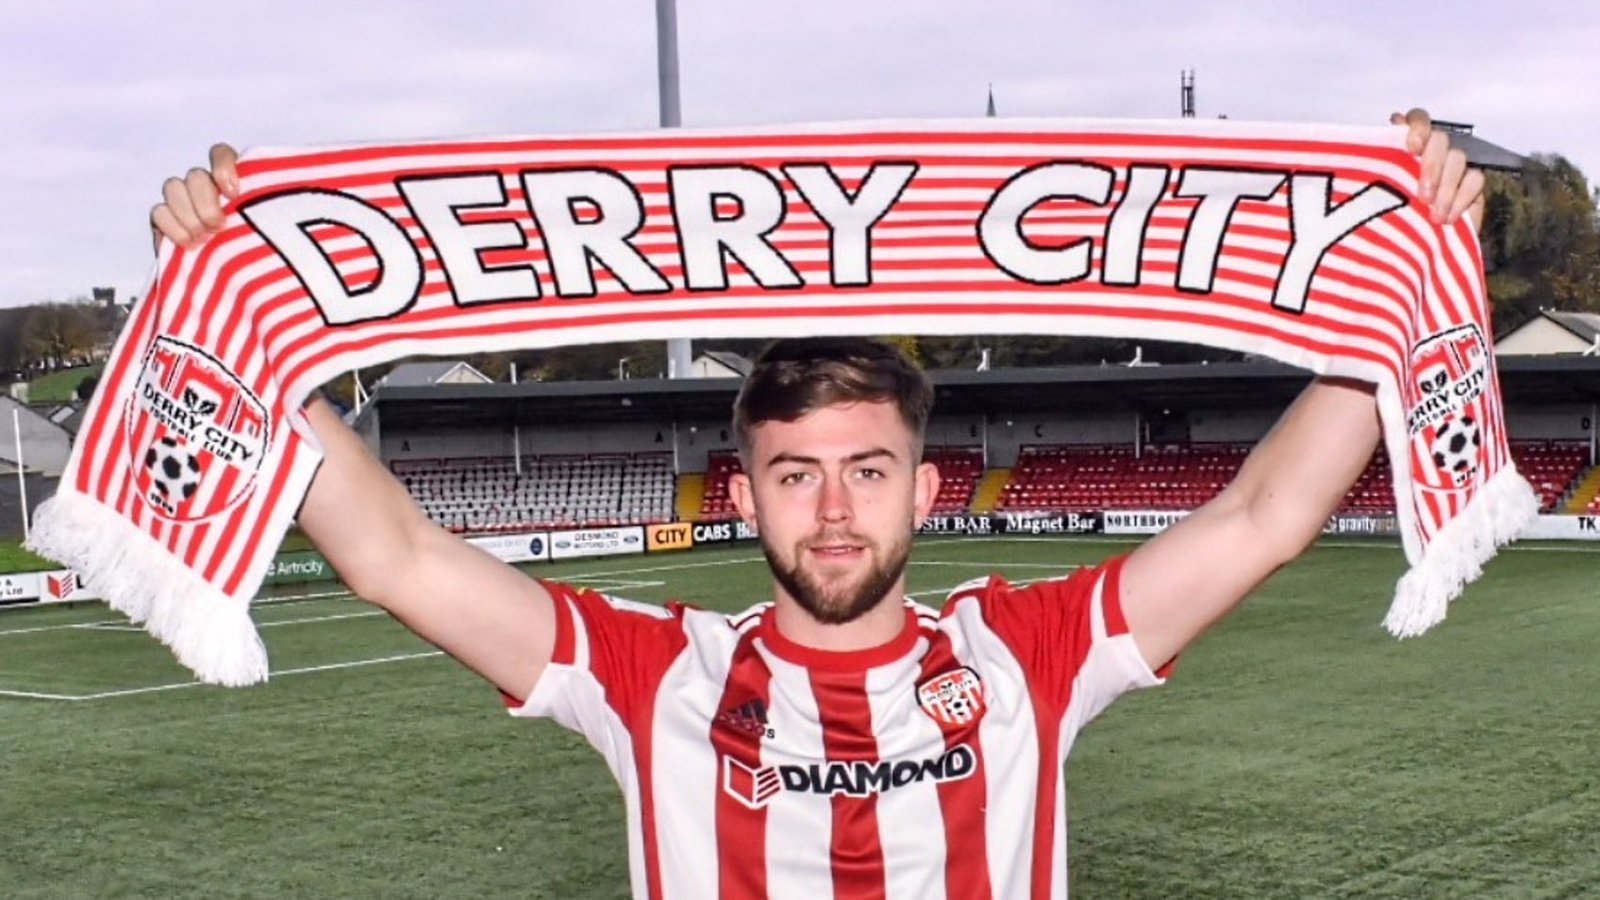 Derry City FC Press Kit - Derry City Football Club